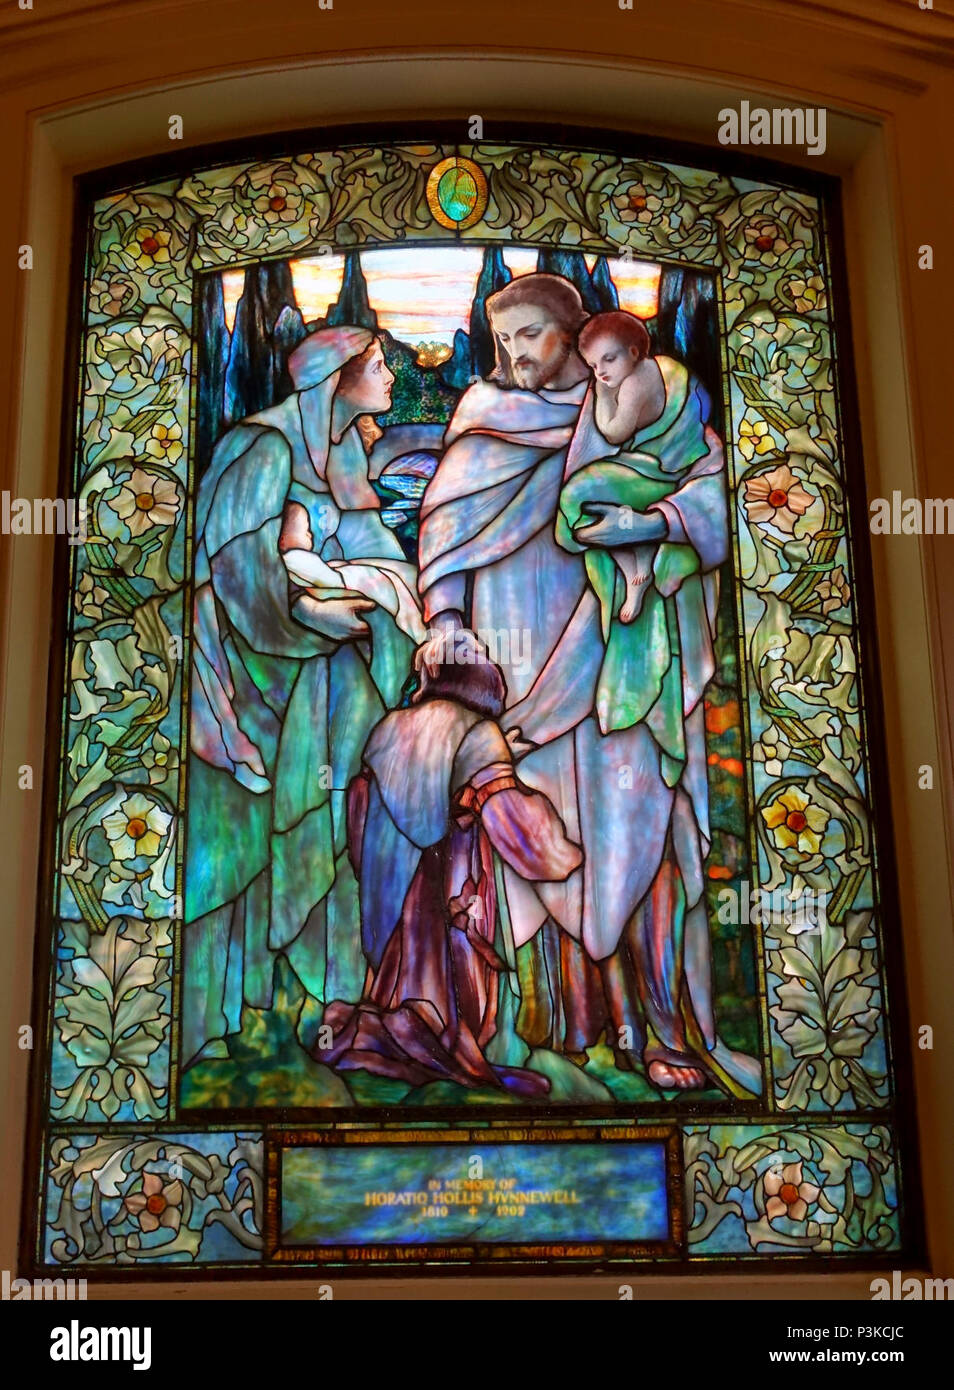 10 Jesus and the Children, Hunnewell Memorial Window, c. 1904, Tiffany Studios - Arlington Street Church - Boston, Massachusetts - DSC06988. Stock Photo